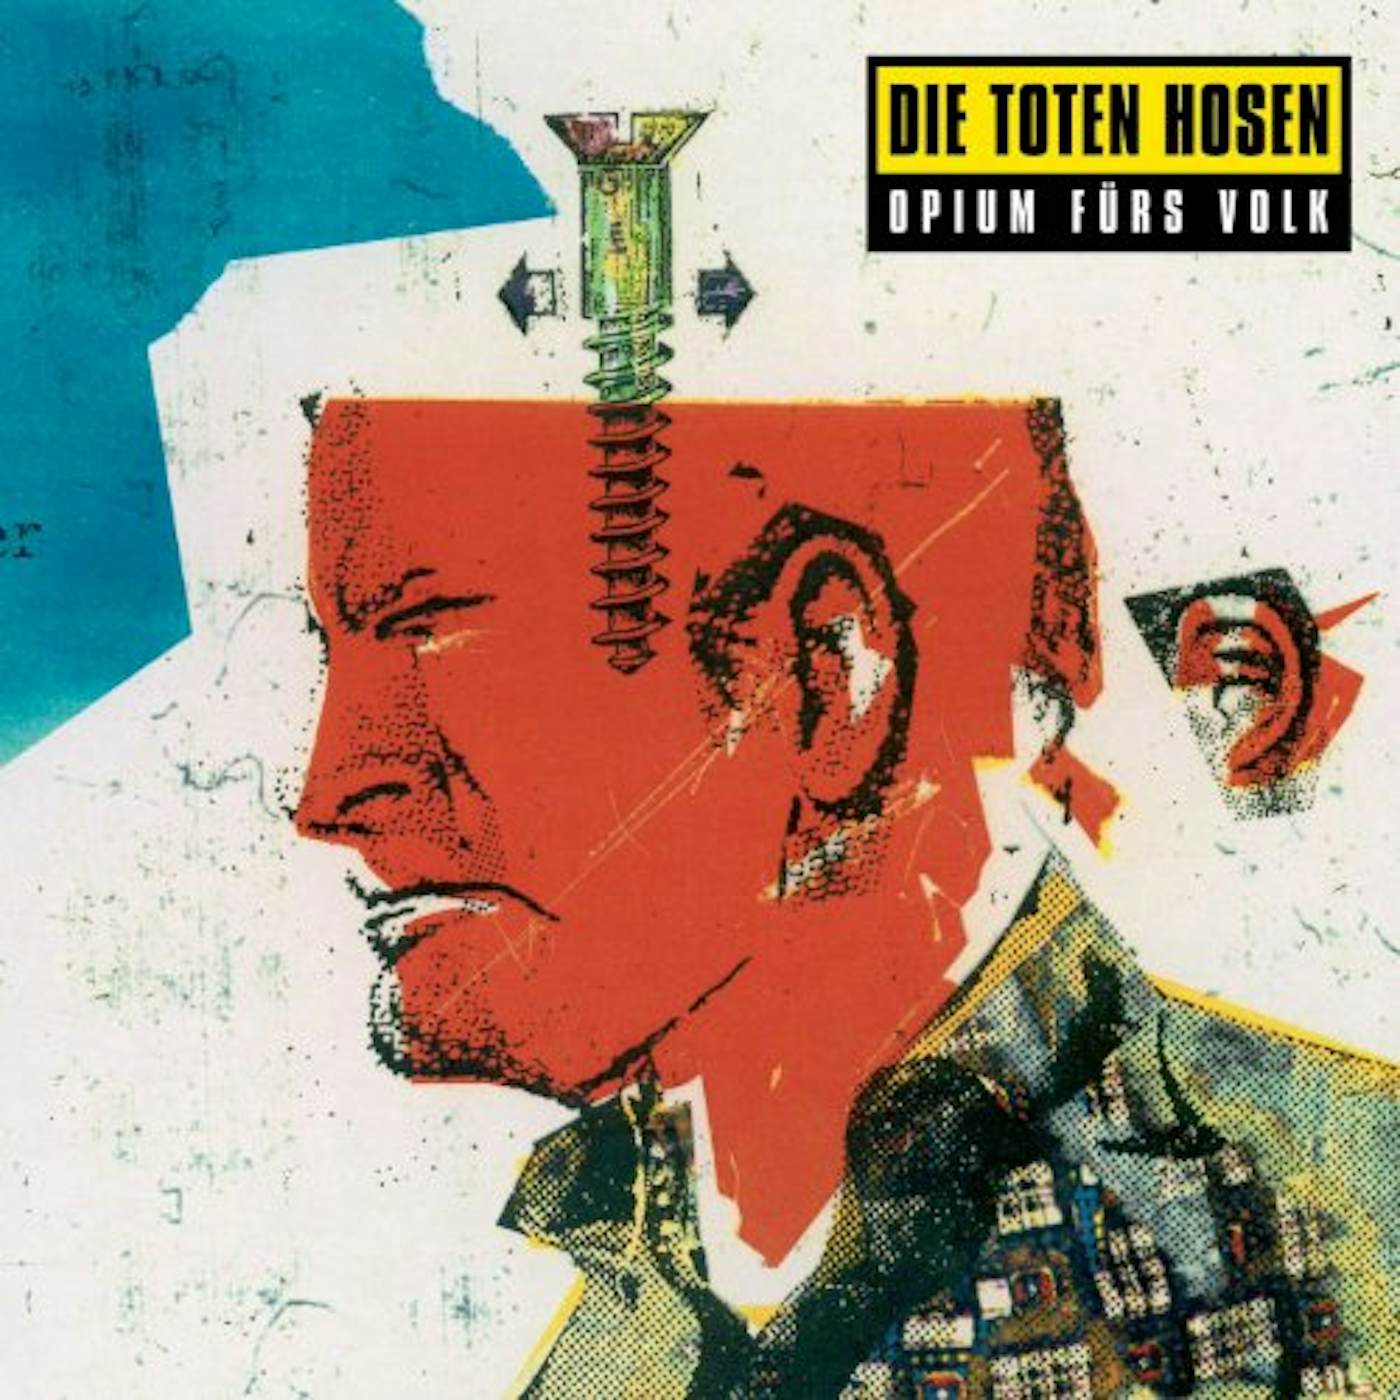 Die Toten Hosen OPIUM FUERS VOLK Vinyl Record